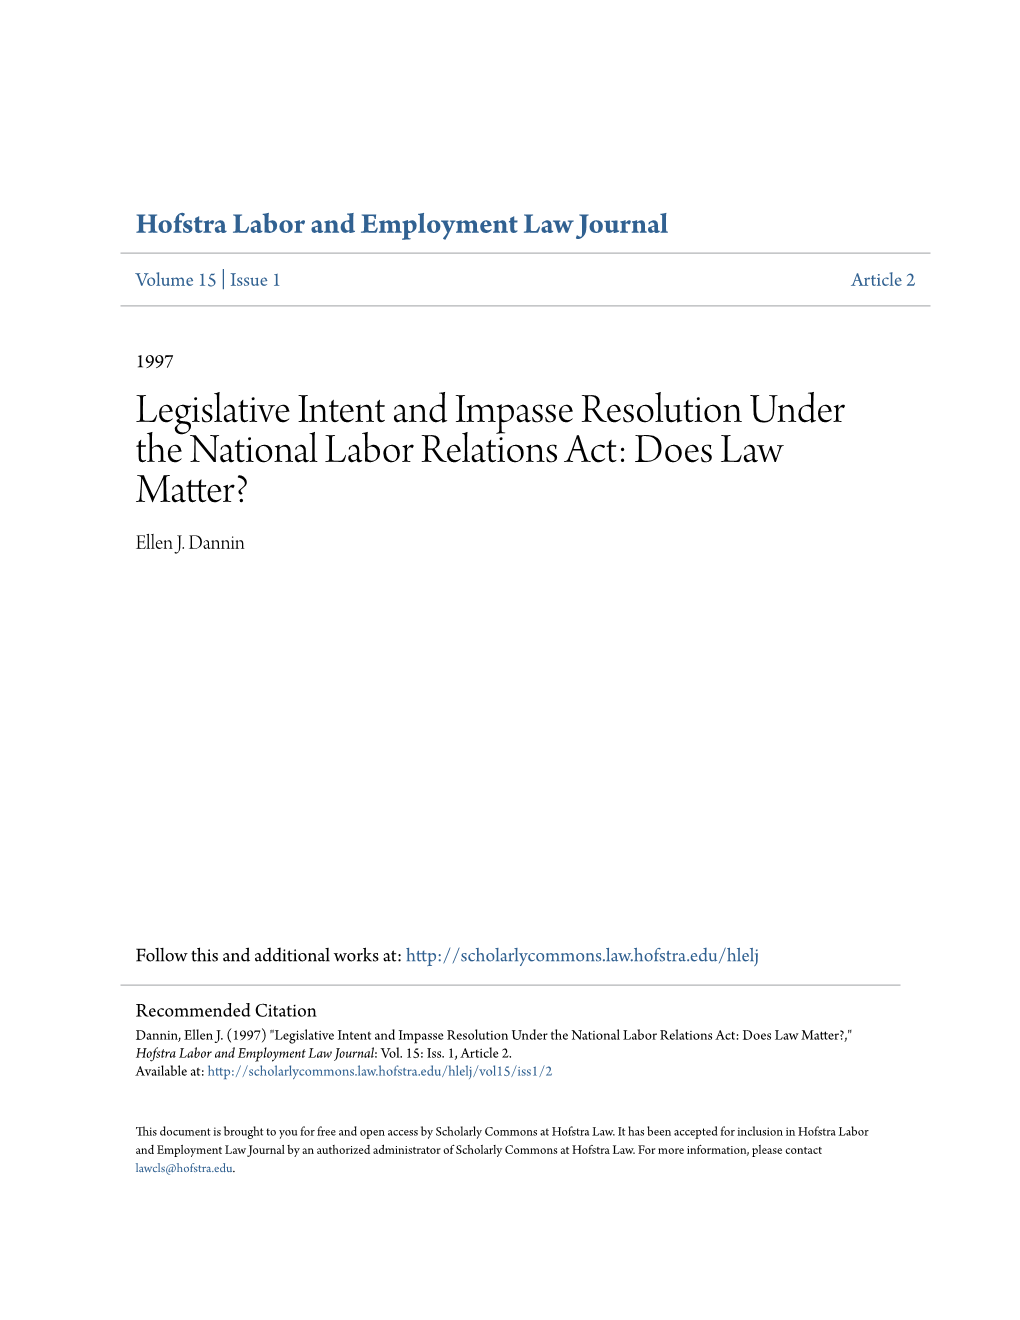 Legislative Intent and Impasse Resolution Under the National Labor Relations Act: Does Law Matter? Ellen J